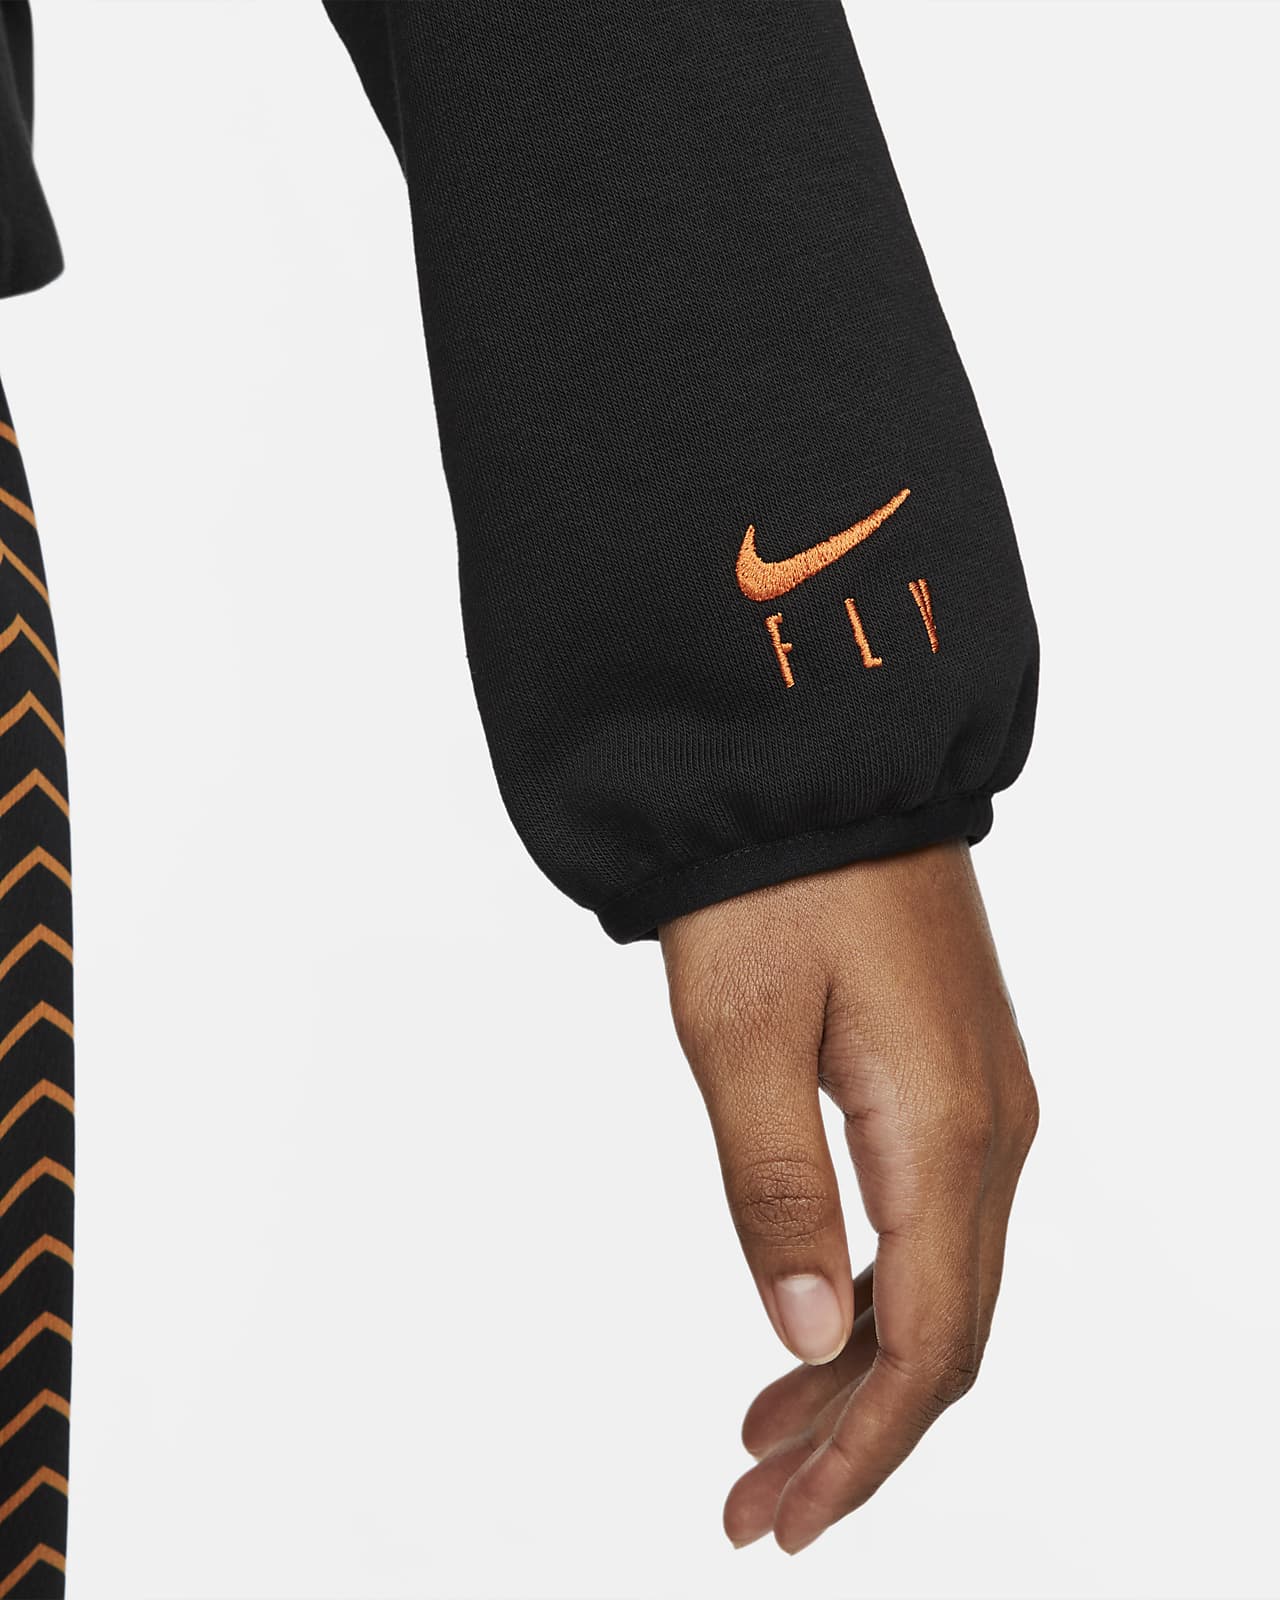 Basketball Hoodies & Sweatshirts. Nike CA